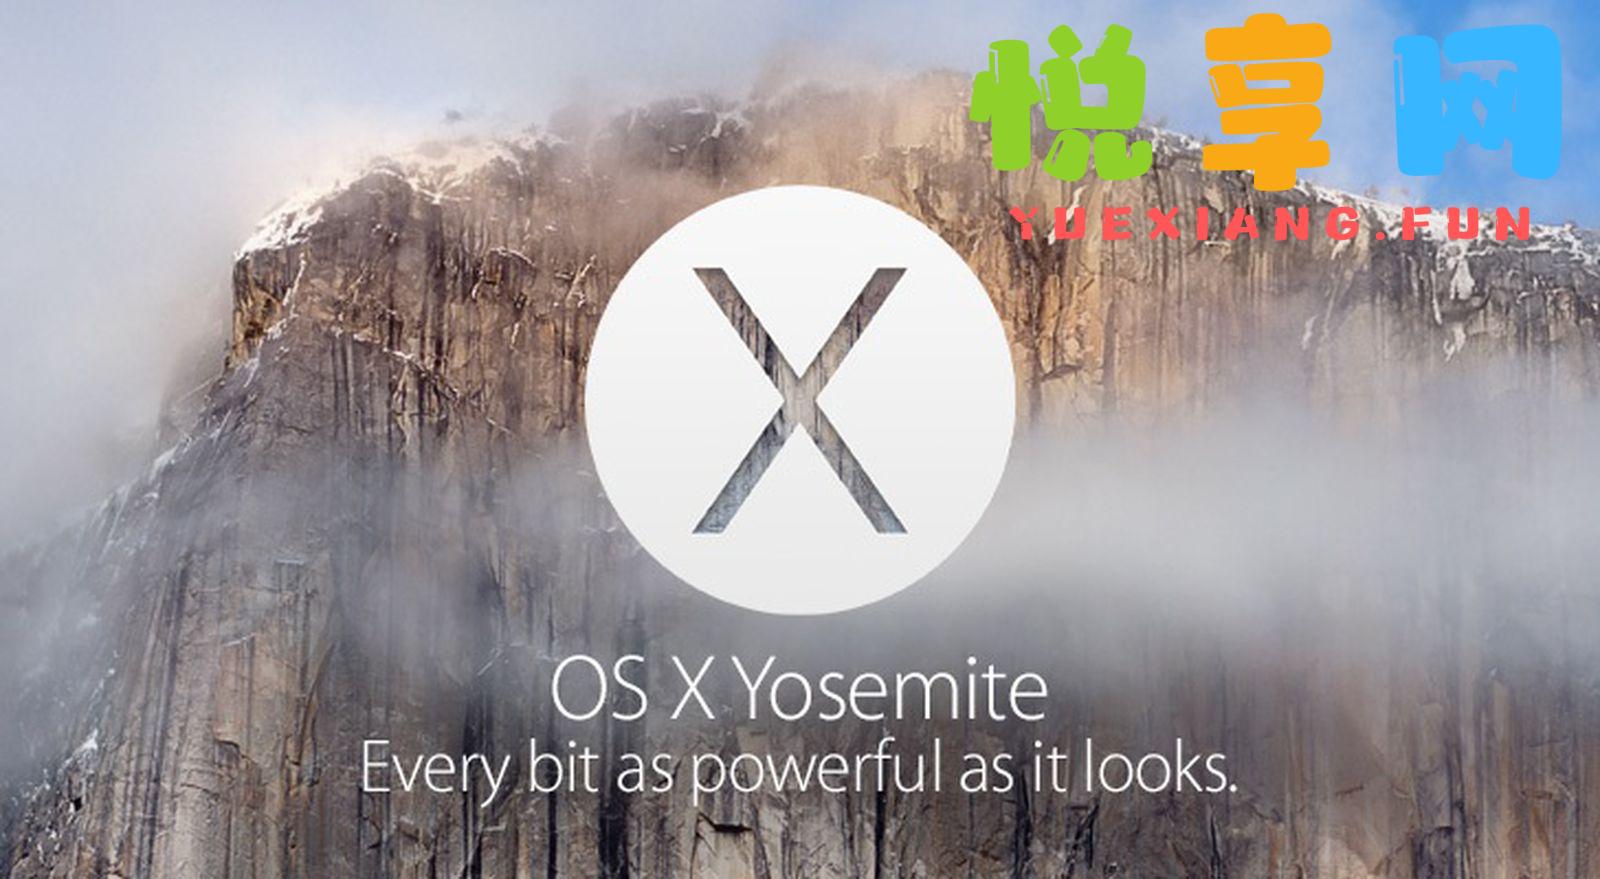 Mac OS X Yosemite 10.10.5 (14F27) 虚拟机 ISO 镜像